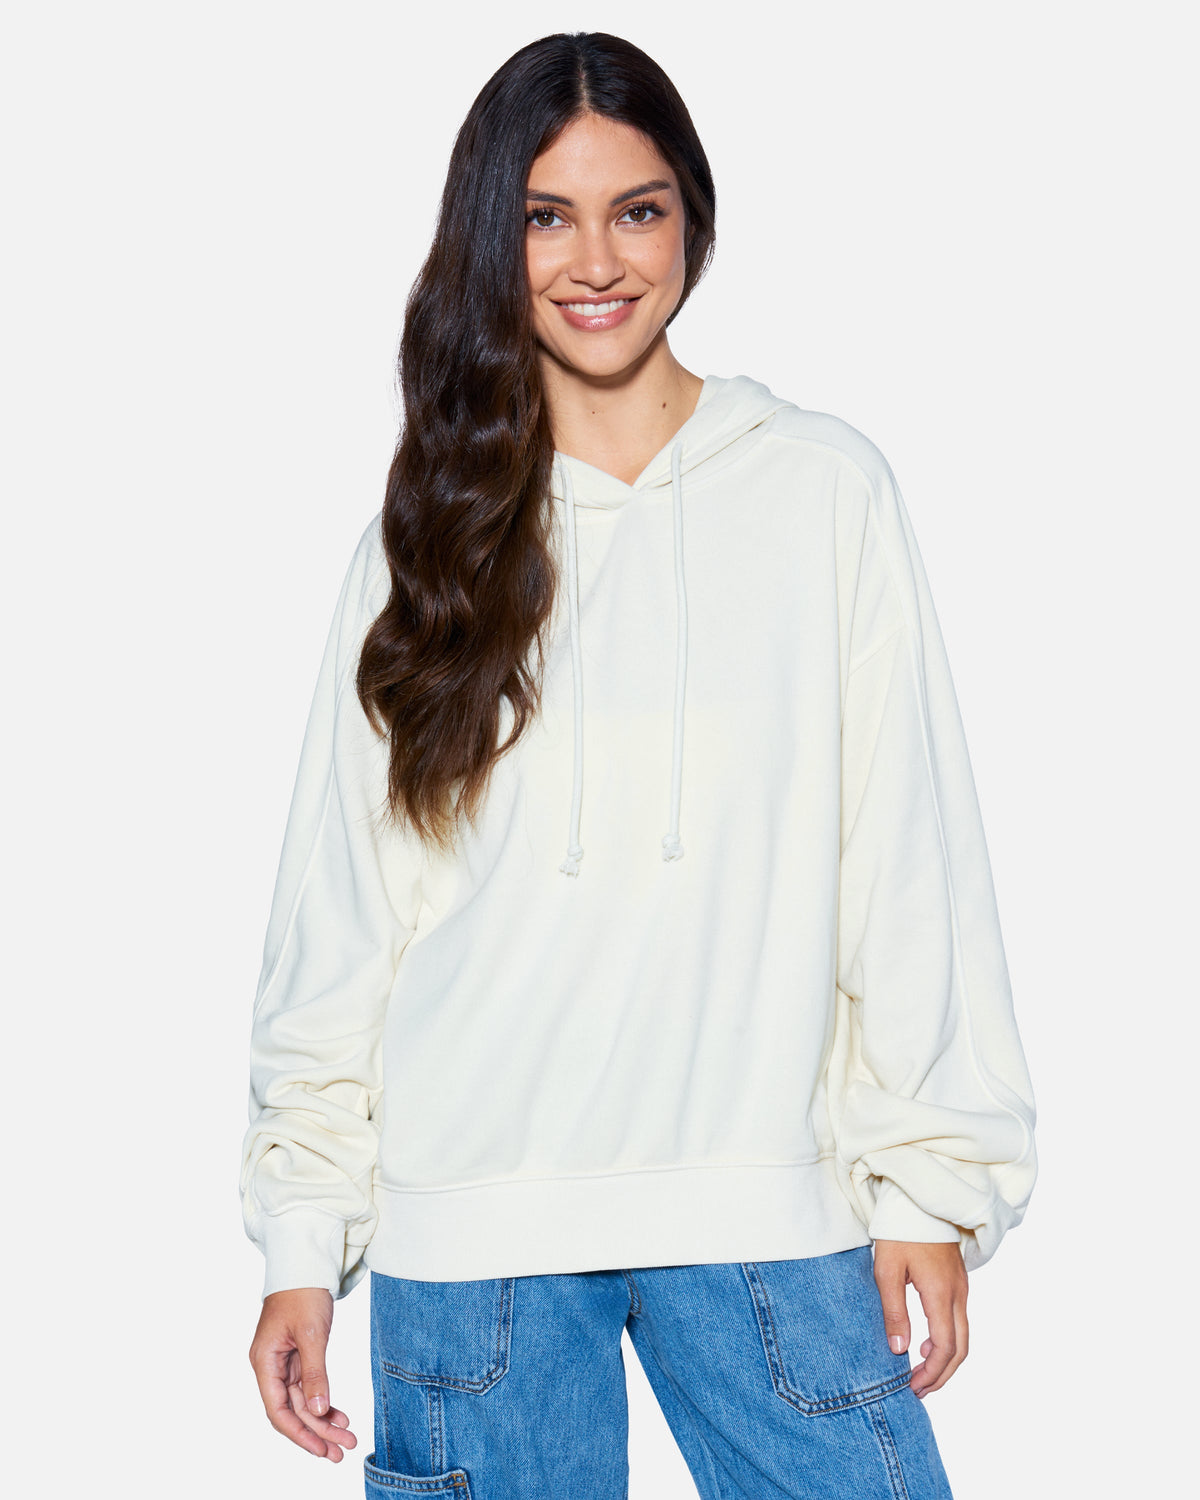 Sweaters For Women, Sweatshirts & Hoodies